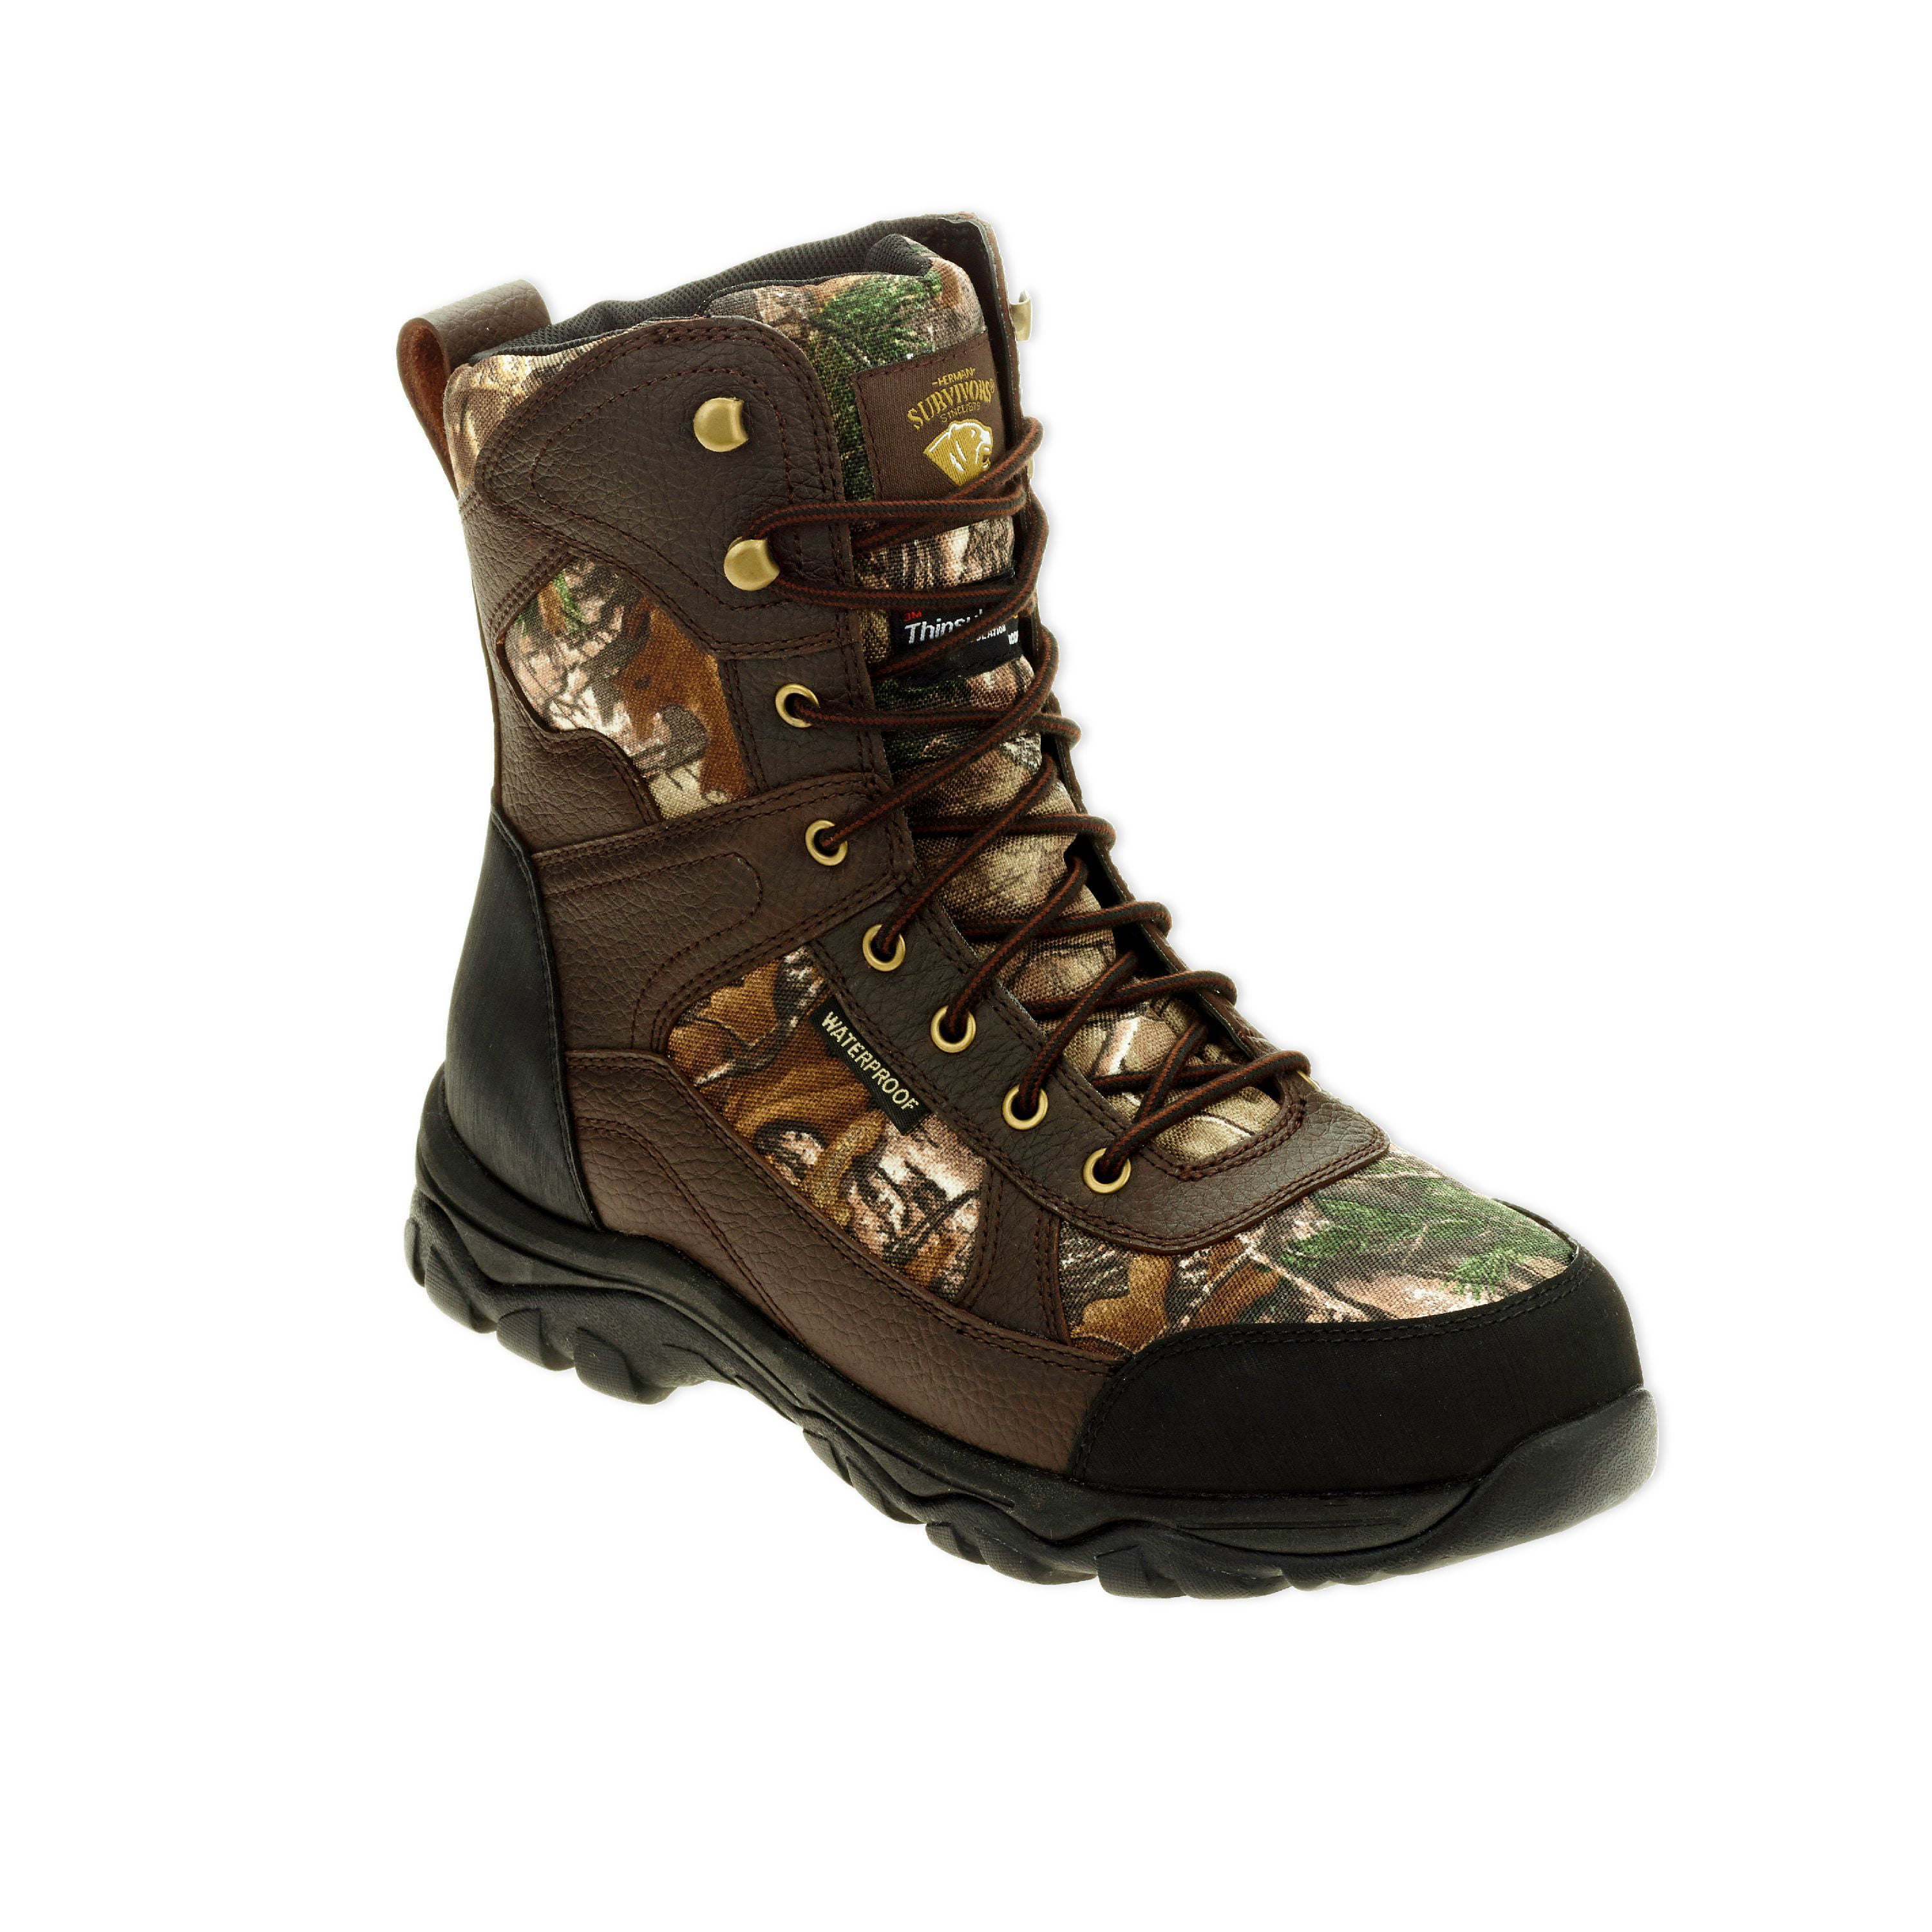 Size 13 Wide HERMAN SURVIVORS 8" Men's Realtree Xtra Waterproof Hunting Boots 